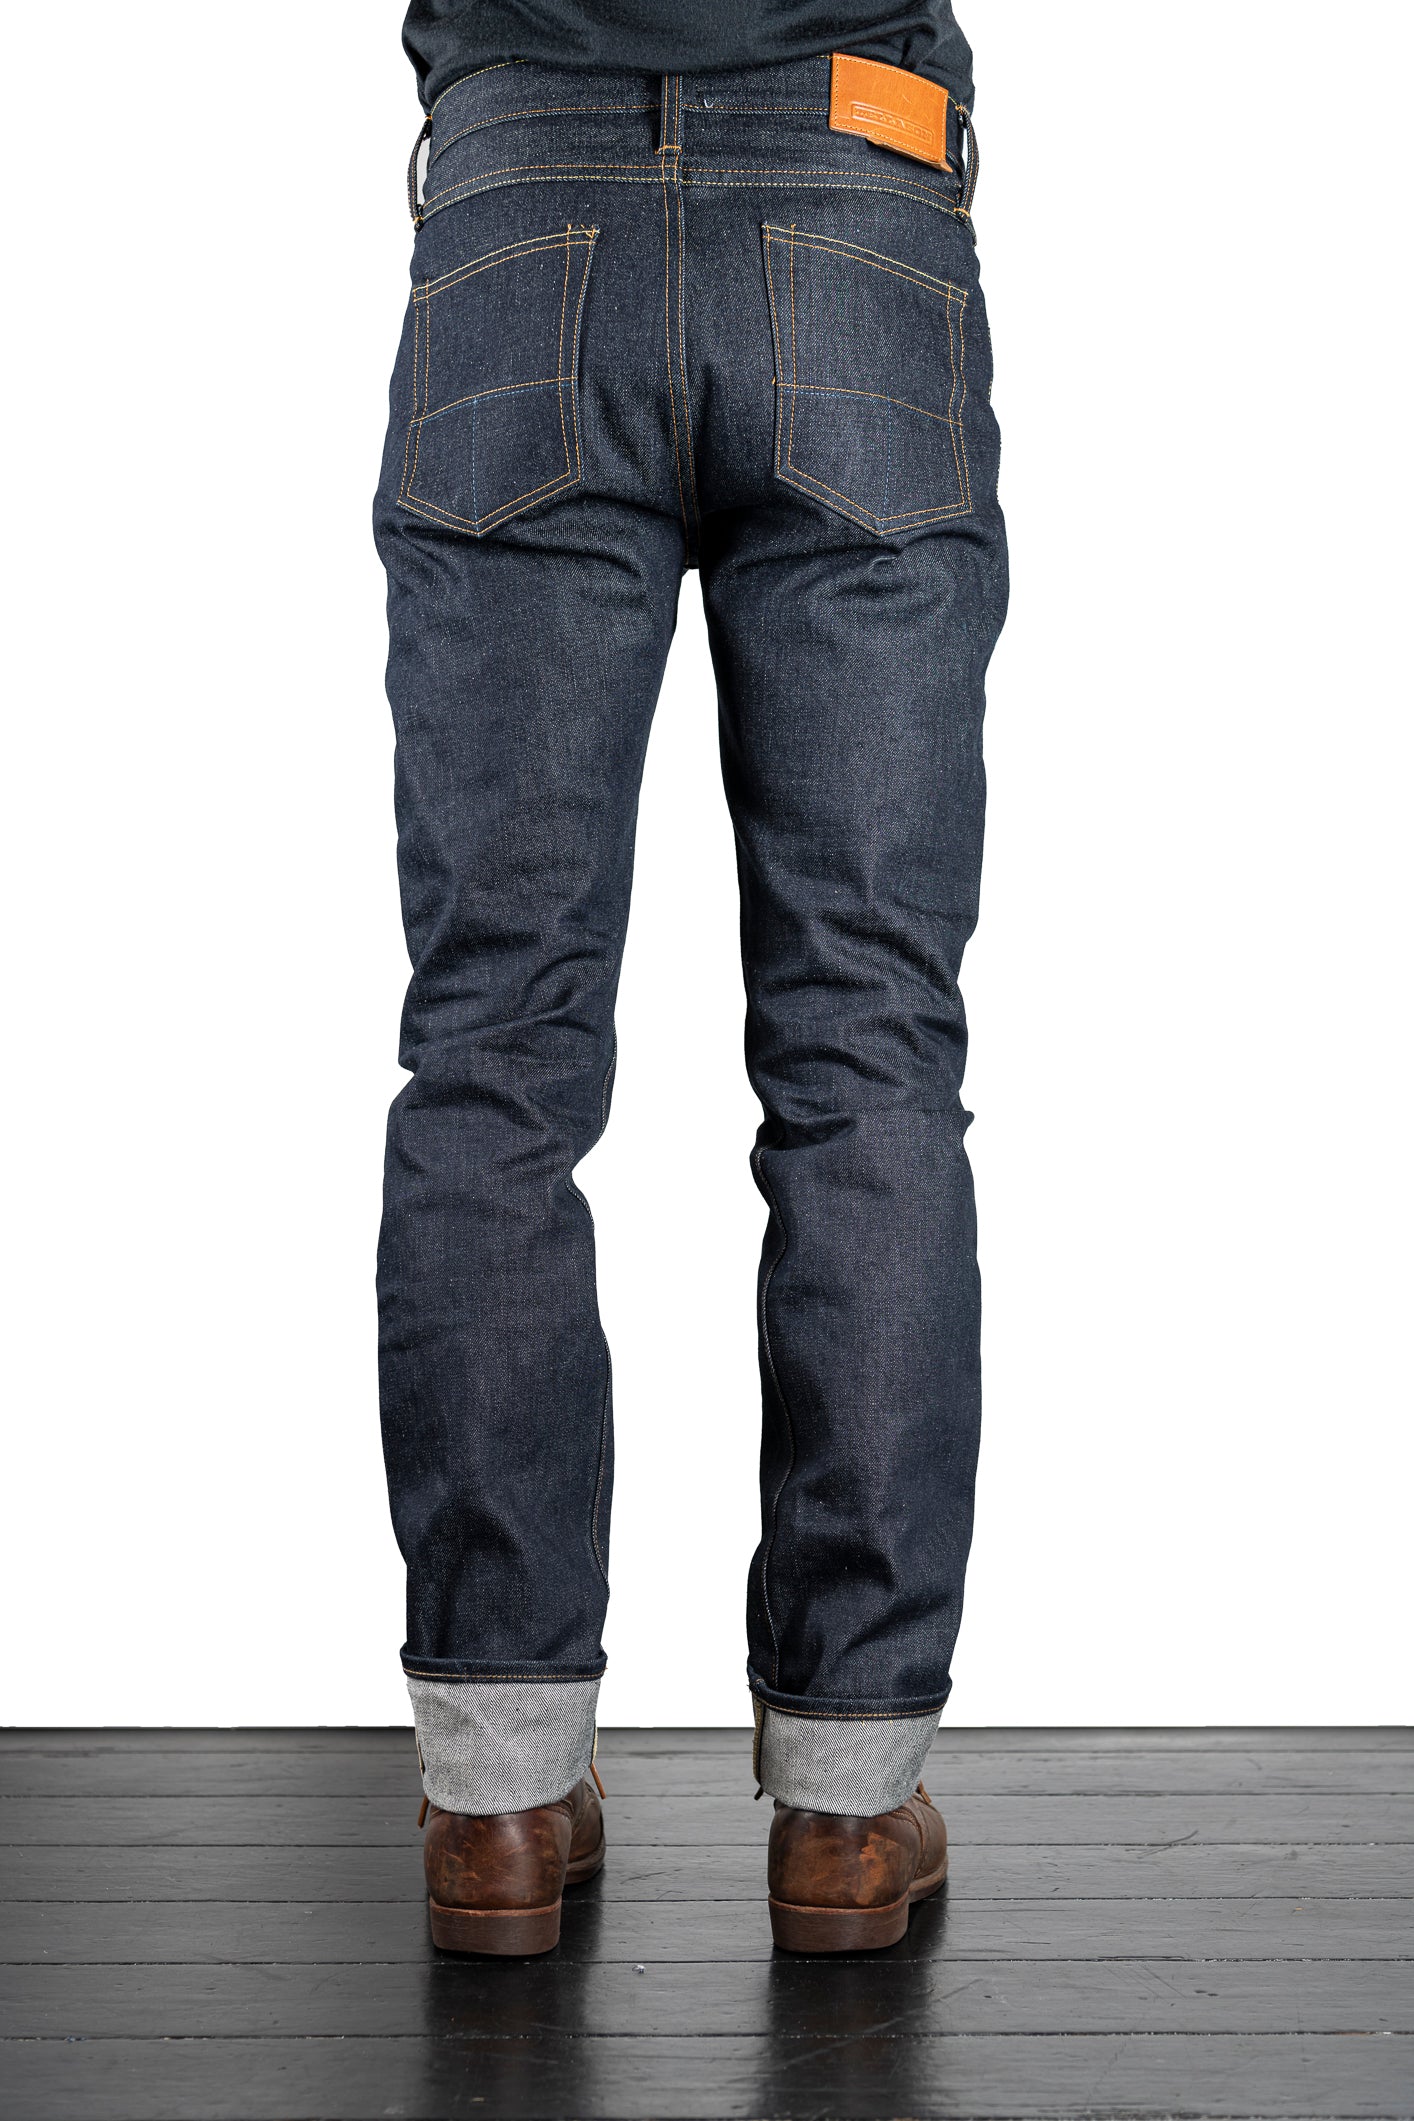 Tellason - Jeans, Elgin, 16.5 oz denim - Brund